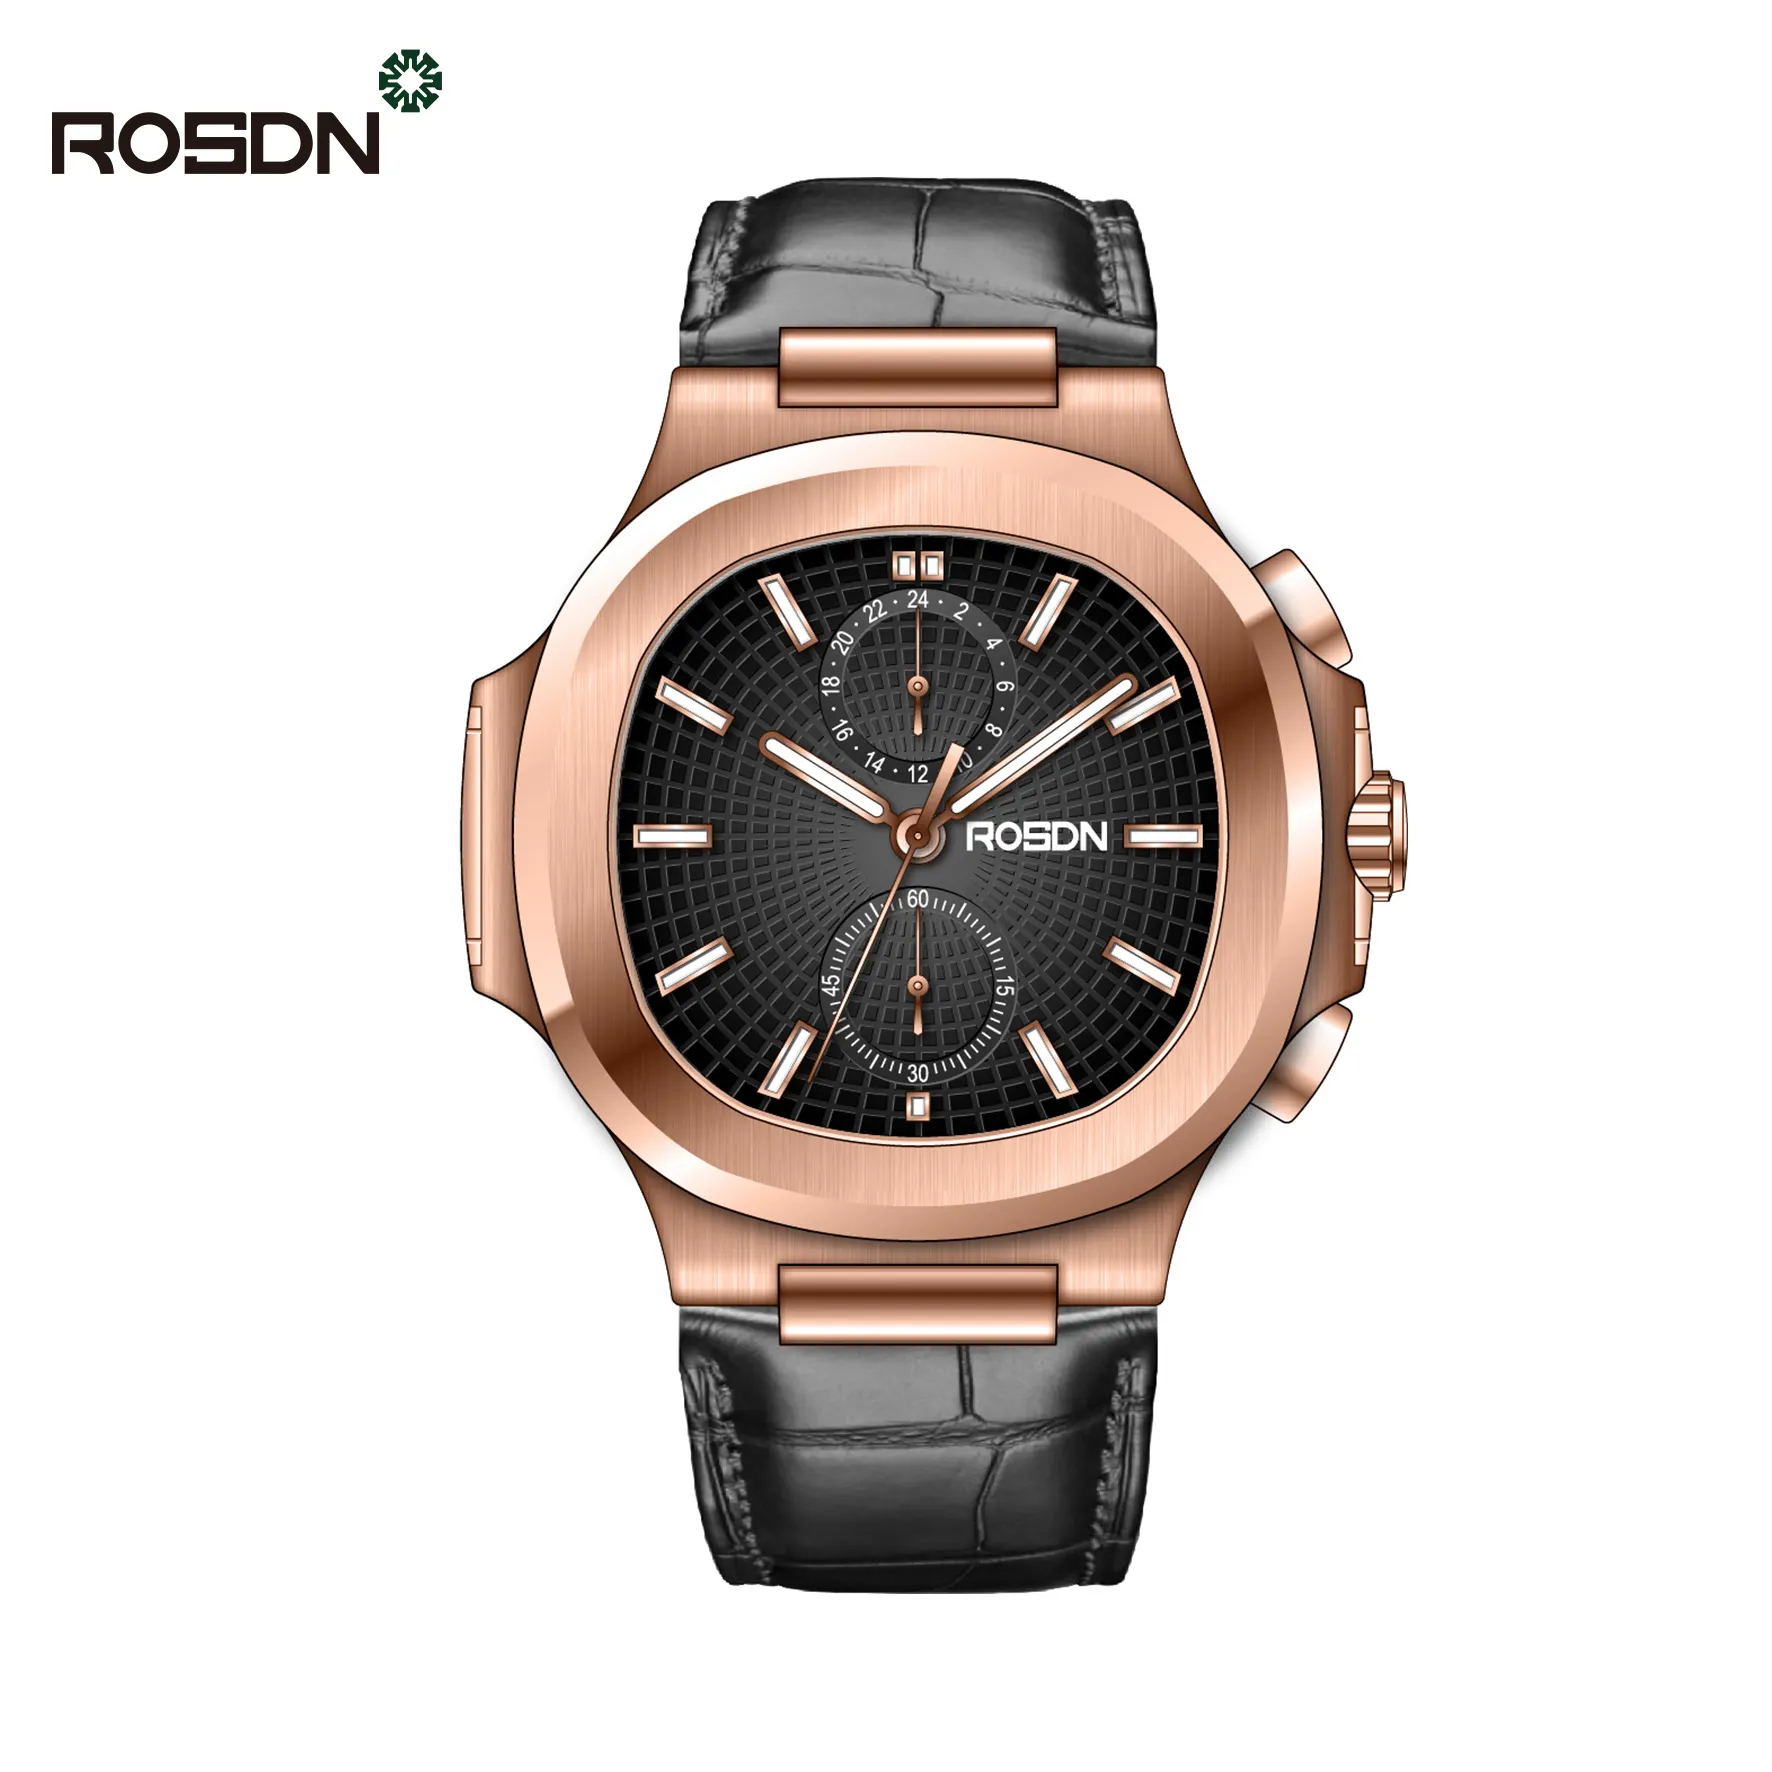 Mens New Fashion Unique Design Watches Luxury Brand Wrist Watch Sport Chronograph Watch Relogio Masculino